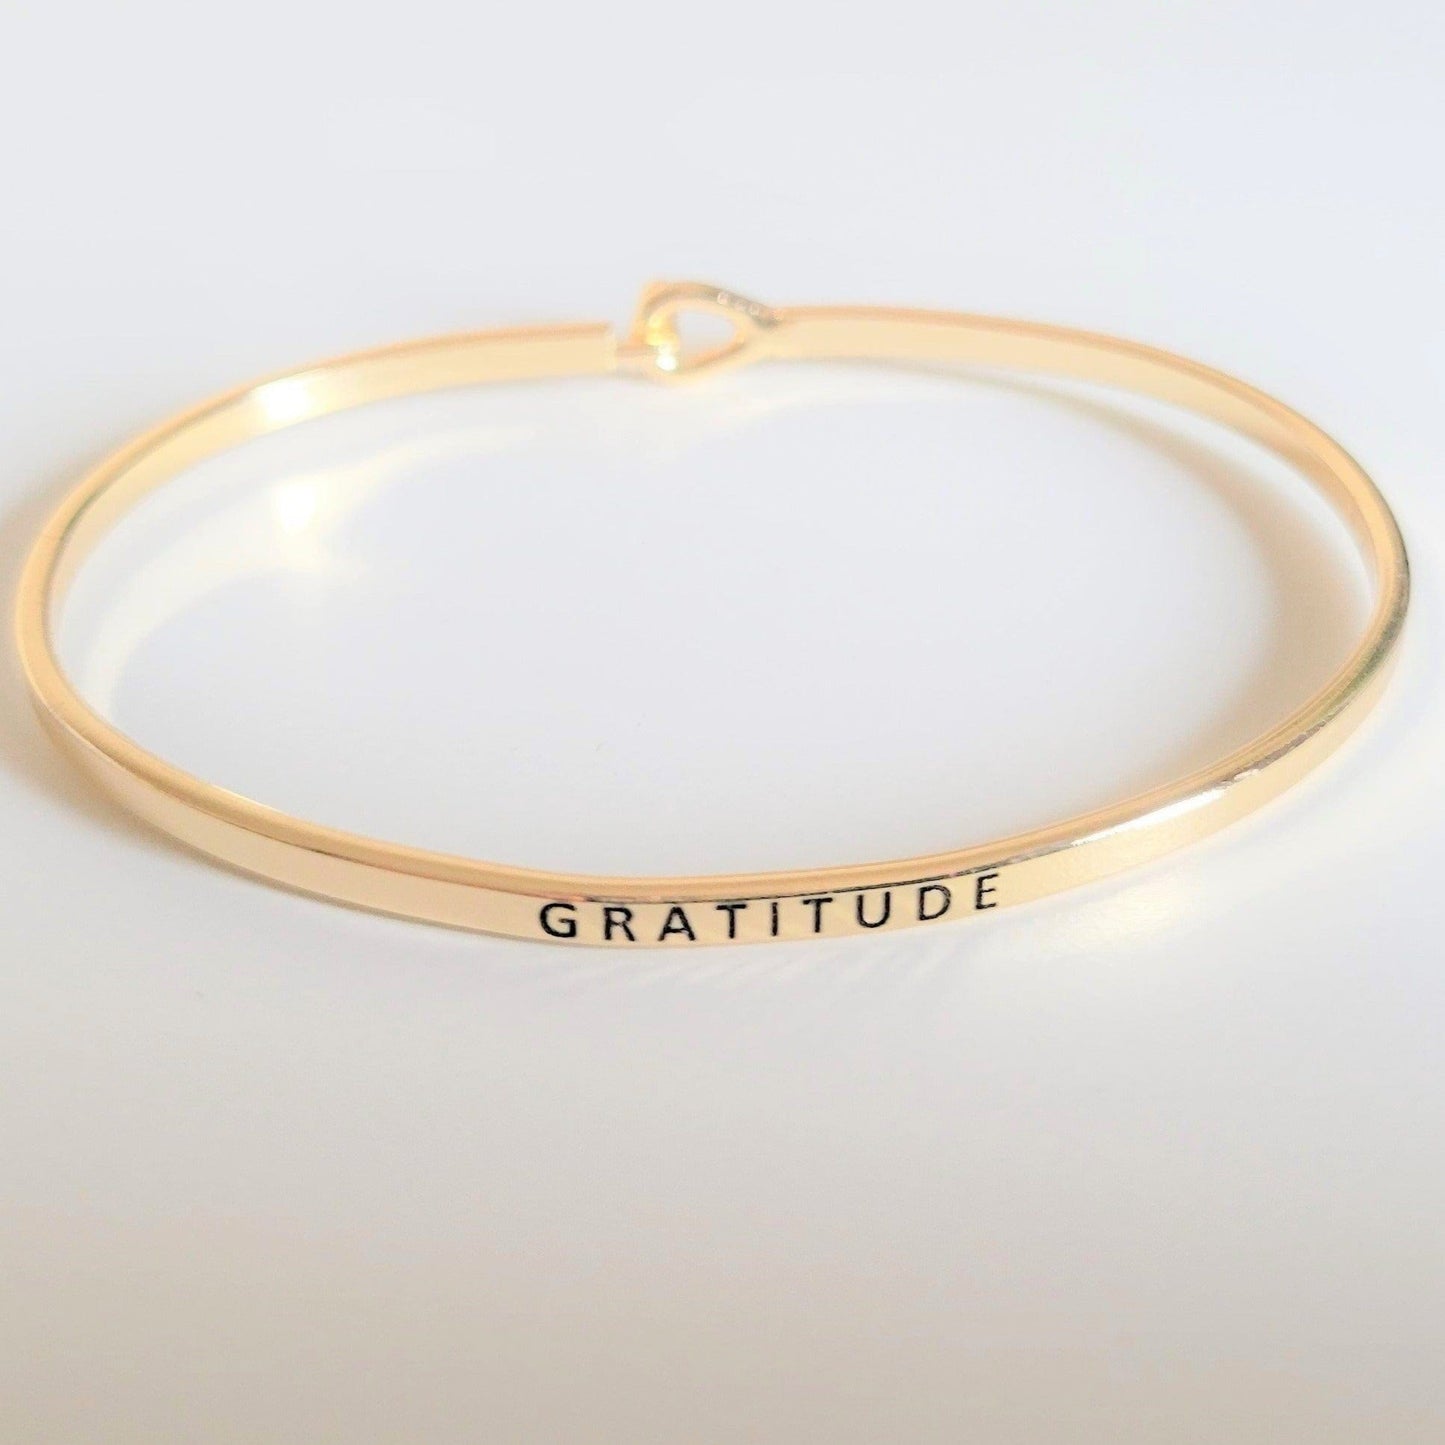 "Gratitude" Bracelet By Recovery Mattters Gold